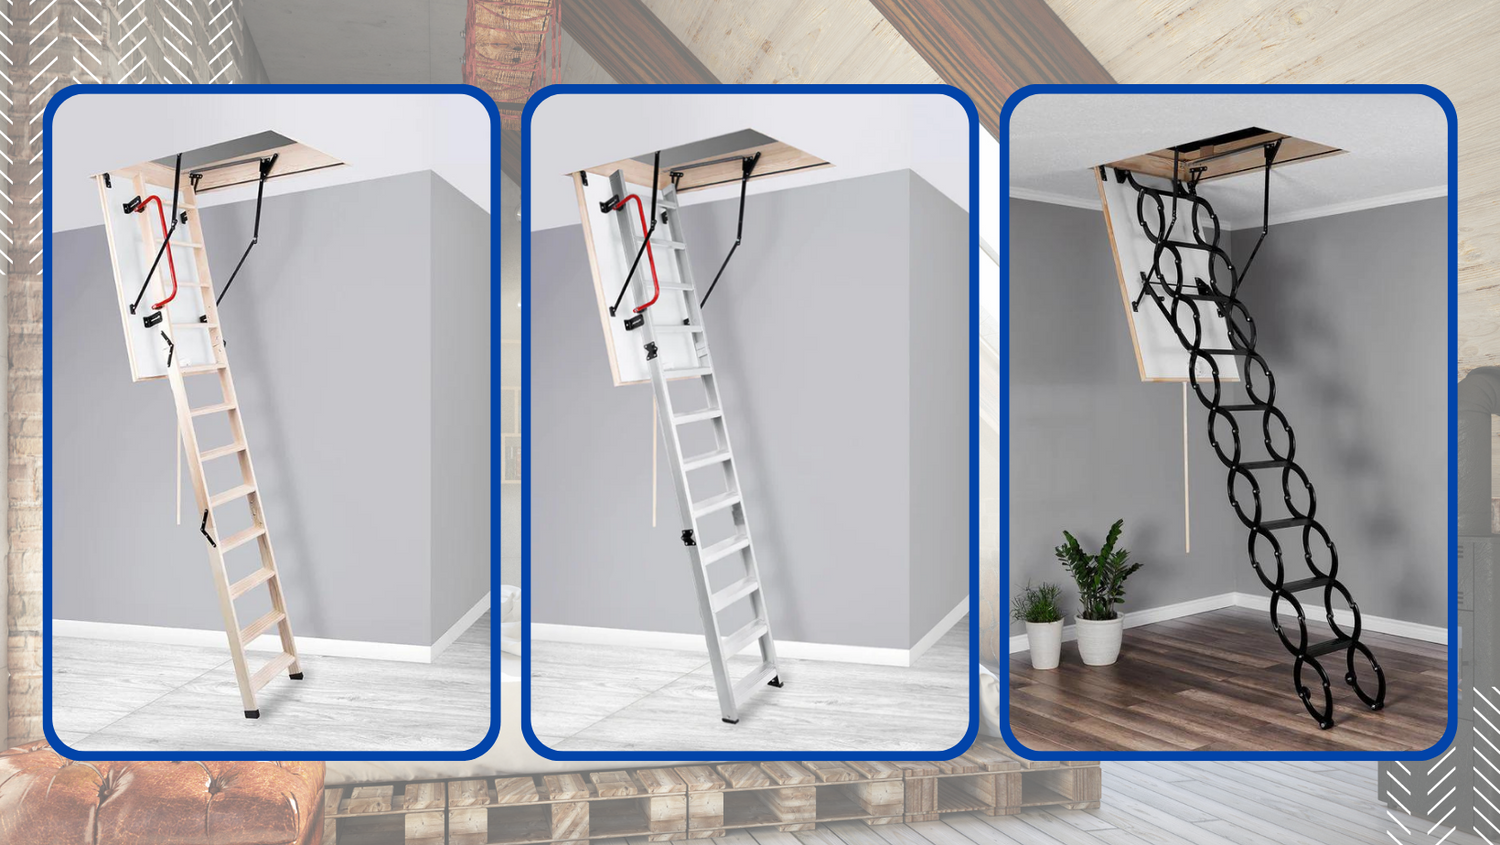 Attic Ladder Spring Lift Issue - Home Improvement Stack Exchange